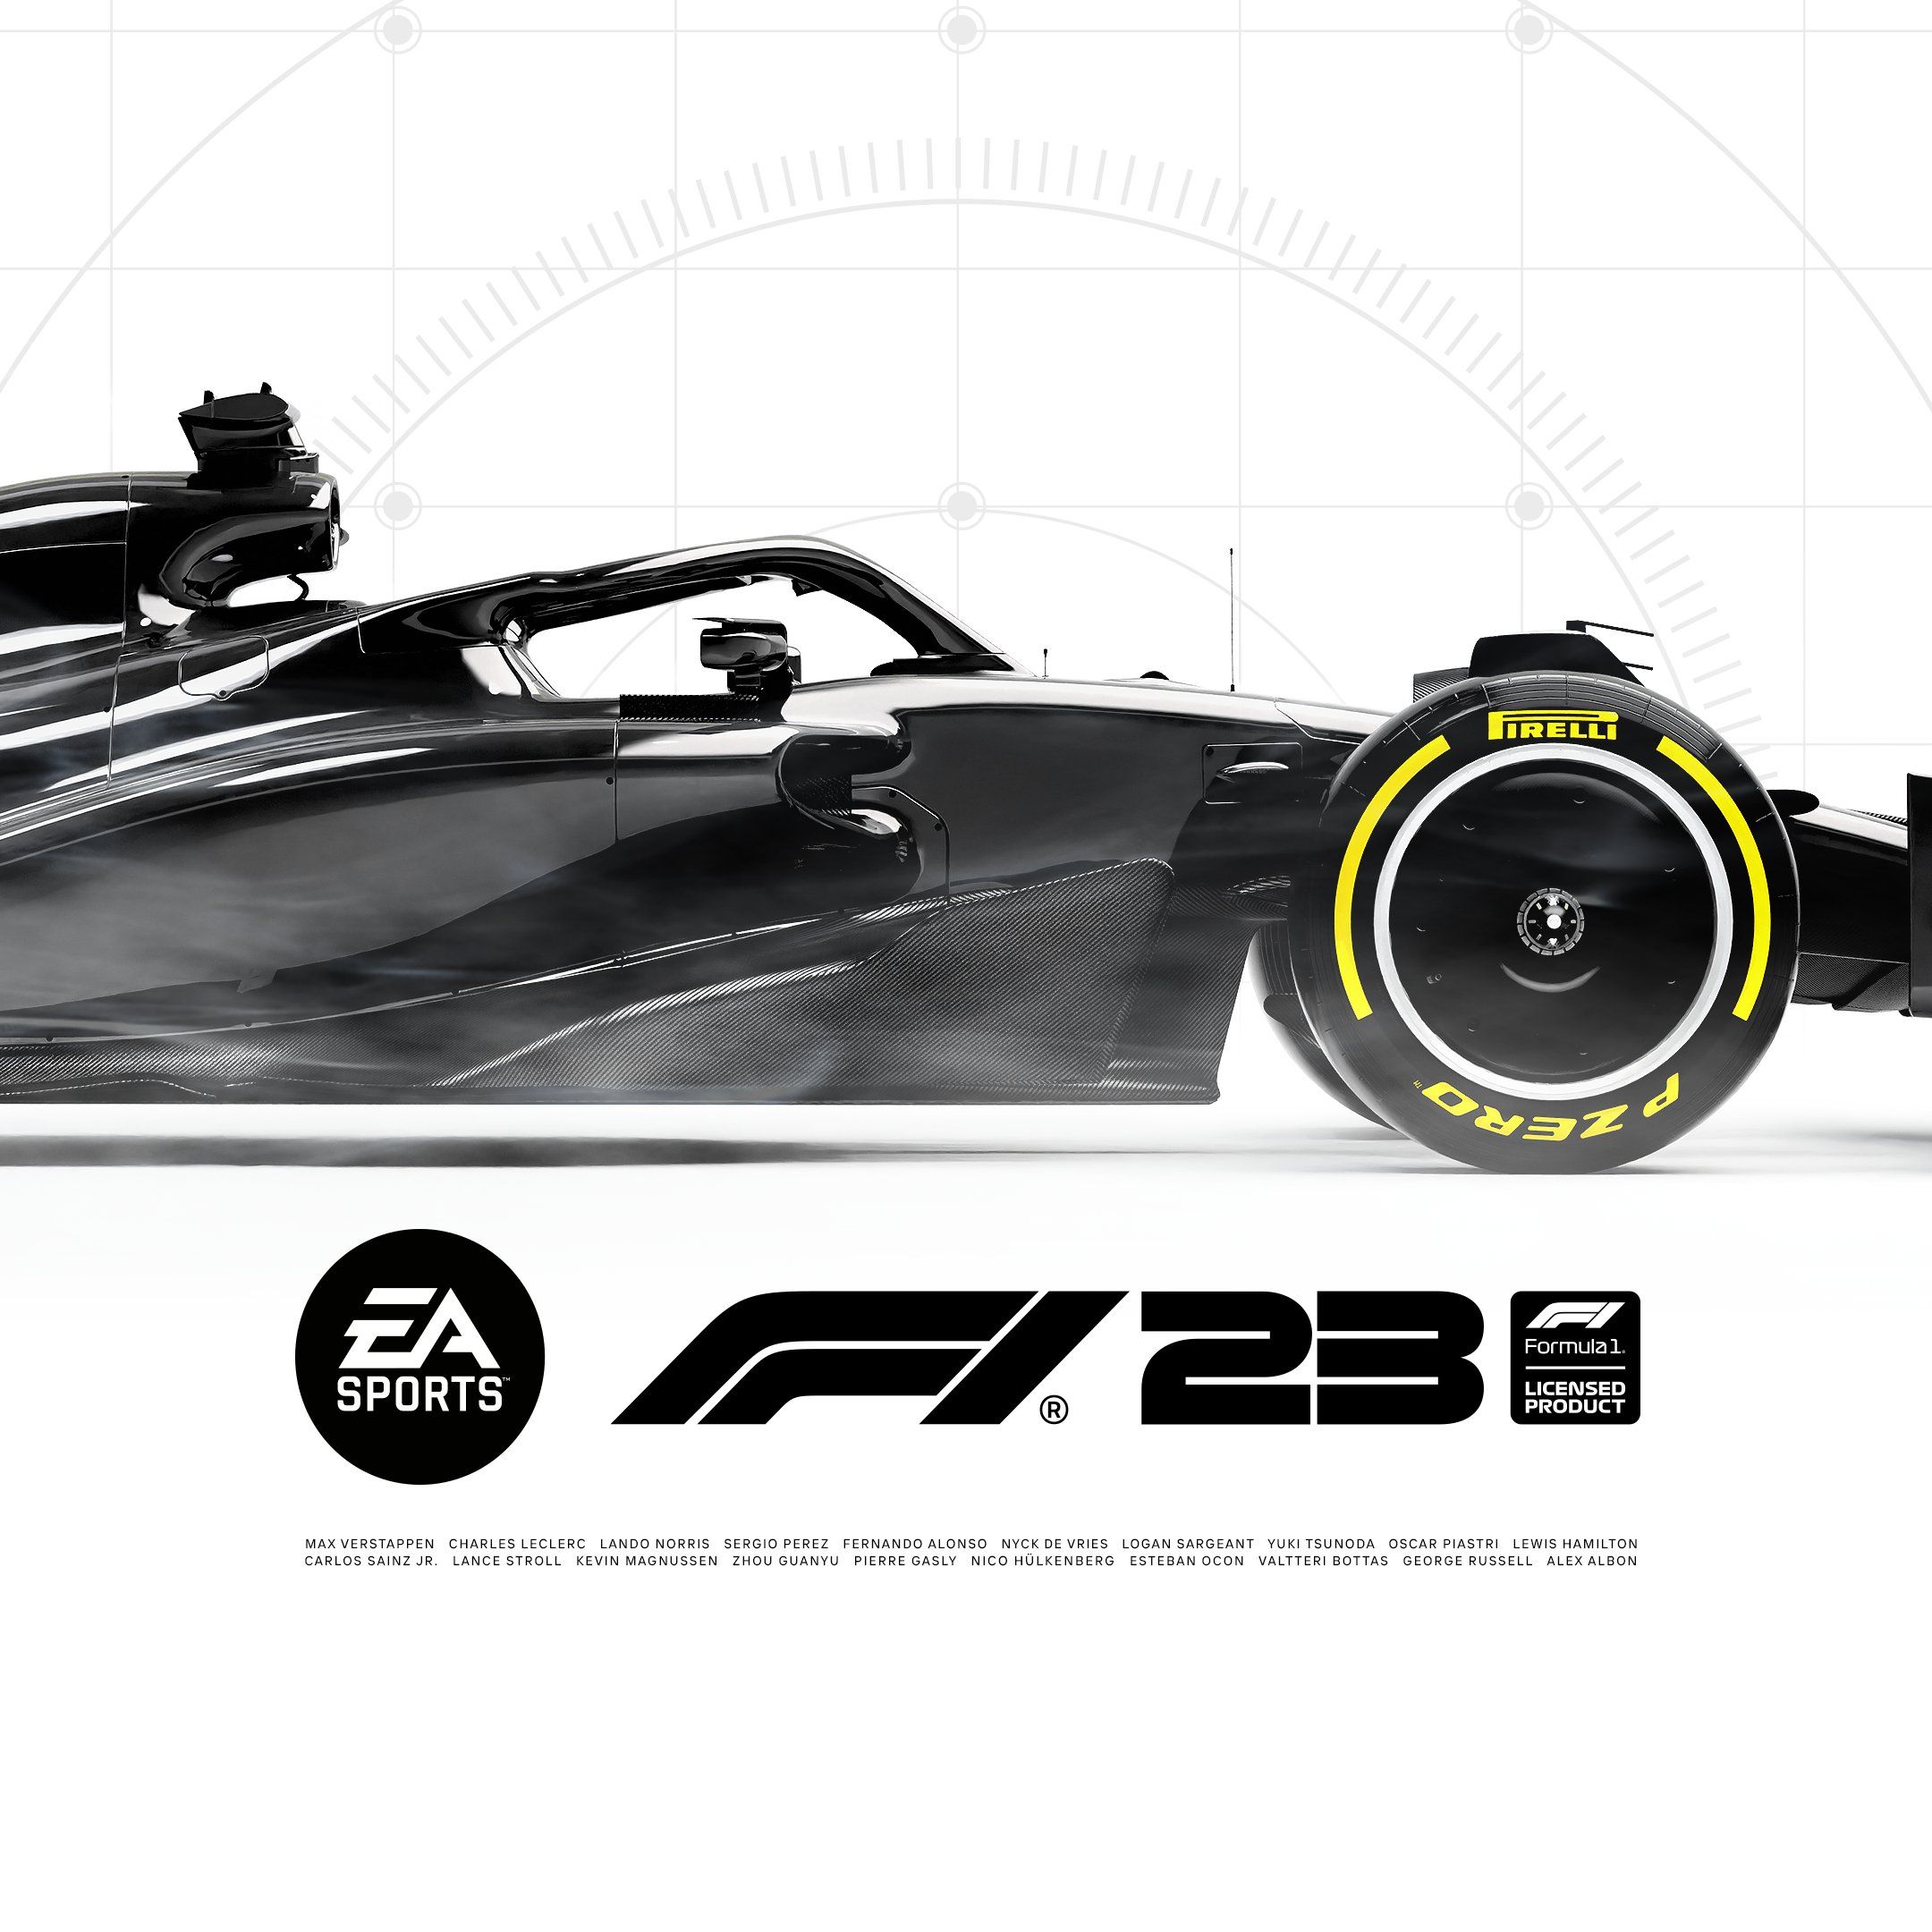 Is F1 23 Cross Platform? Release Date Revealed - News